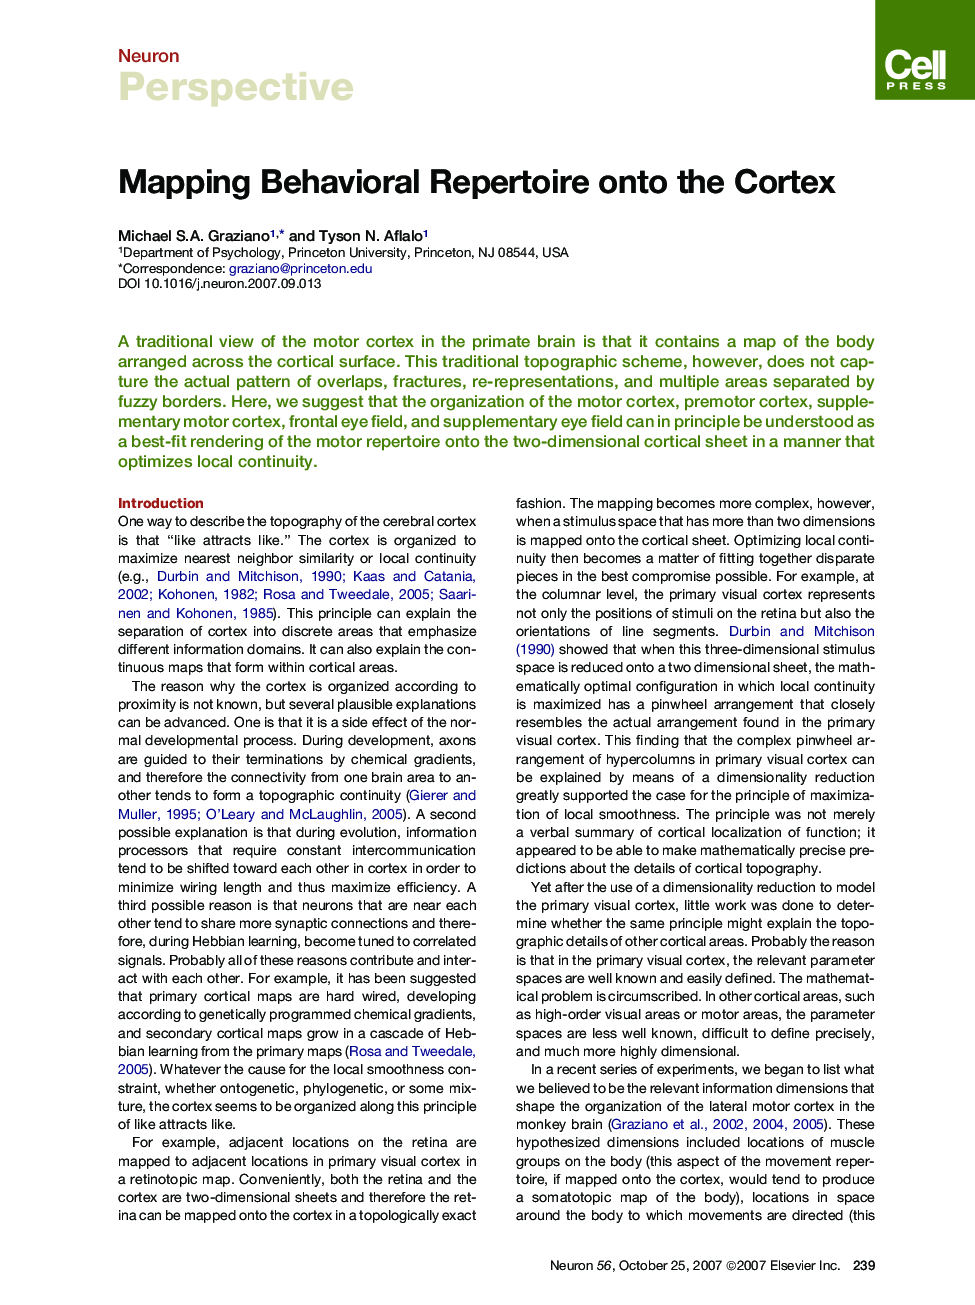 Mapping Behavioral Repertoire onto the Cortex